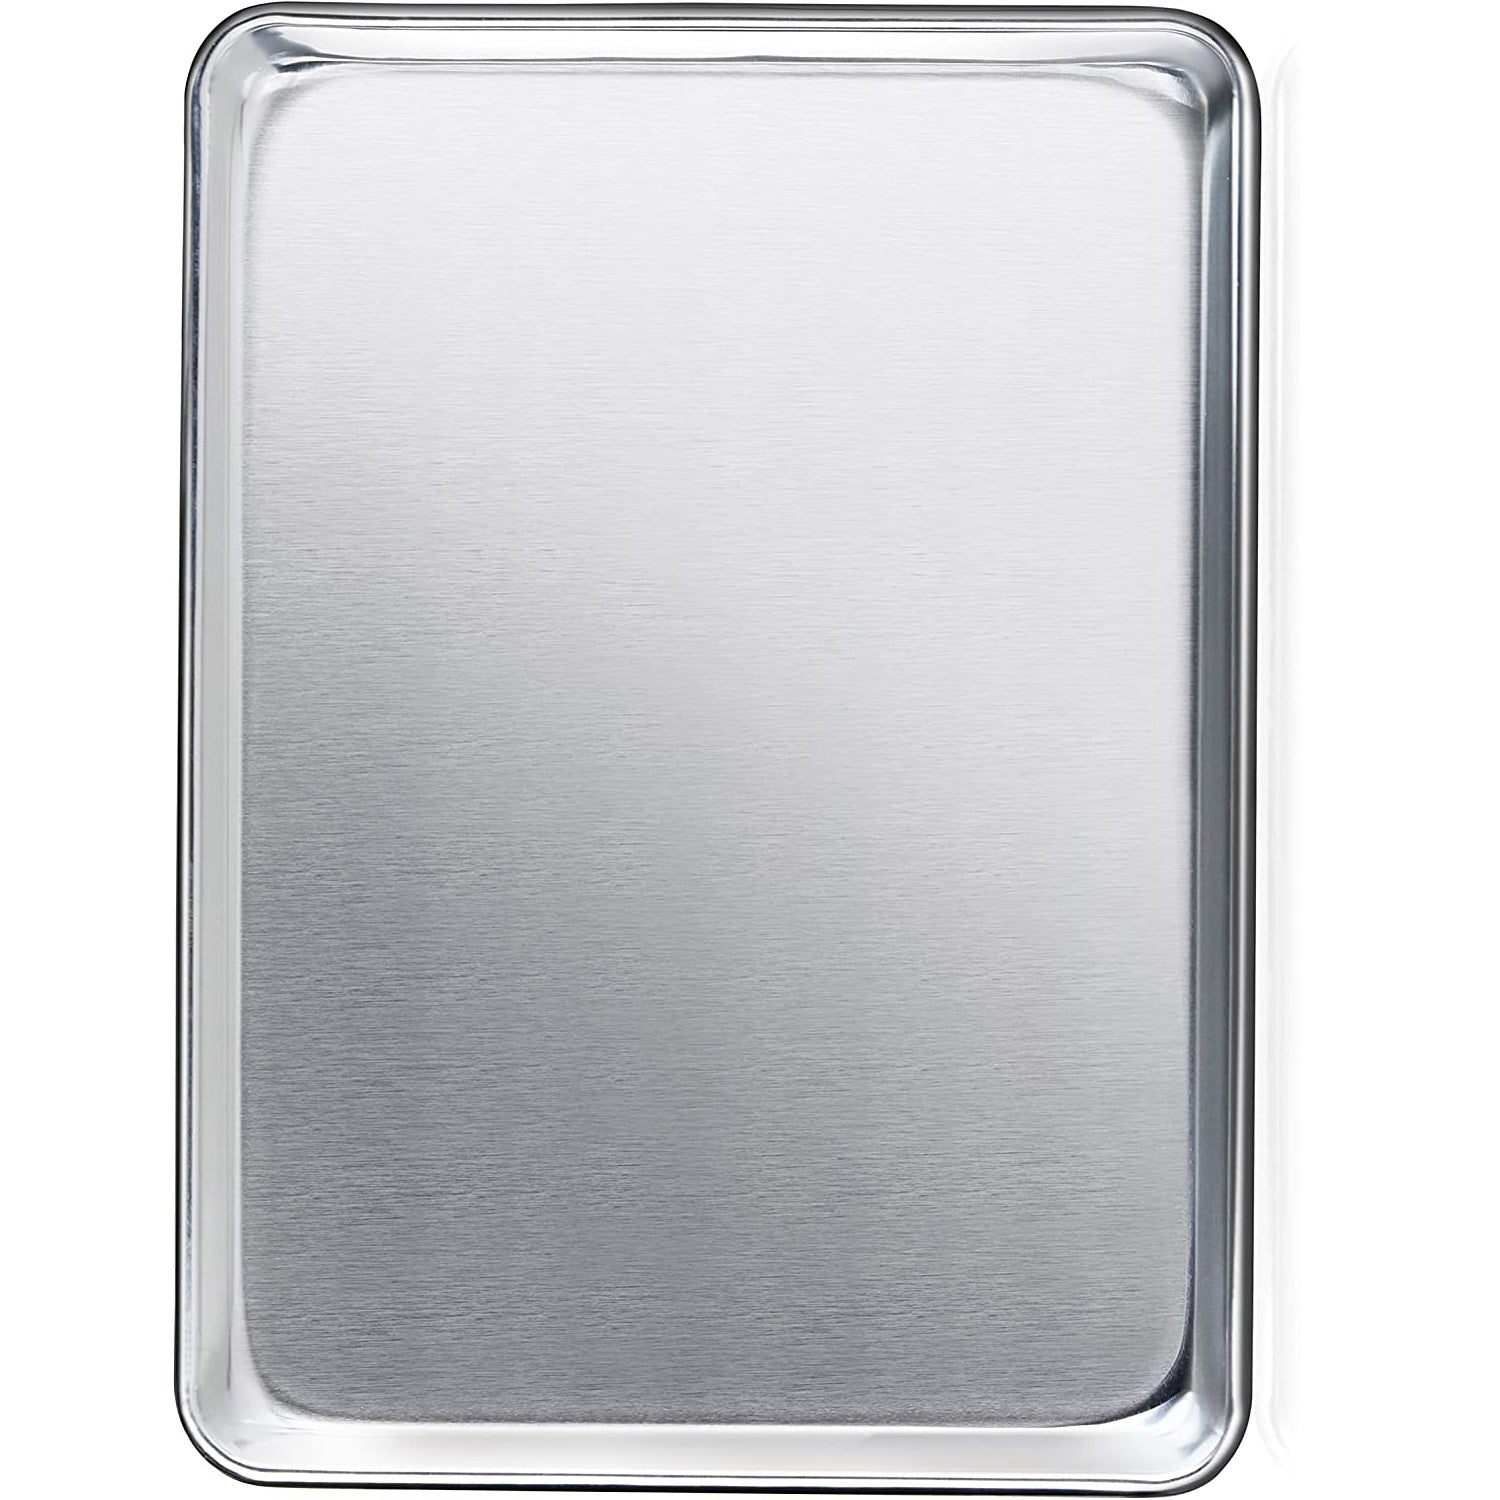 18 x 13 Aluminum Baking/Cookie Sheet Heavy Duty Metal Commercial Baking  Pan